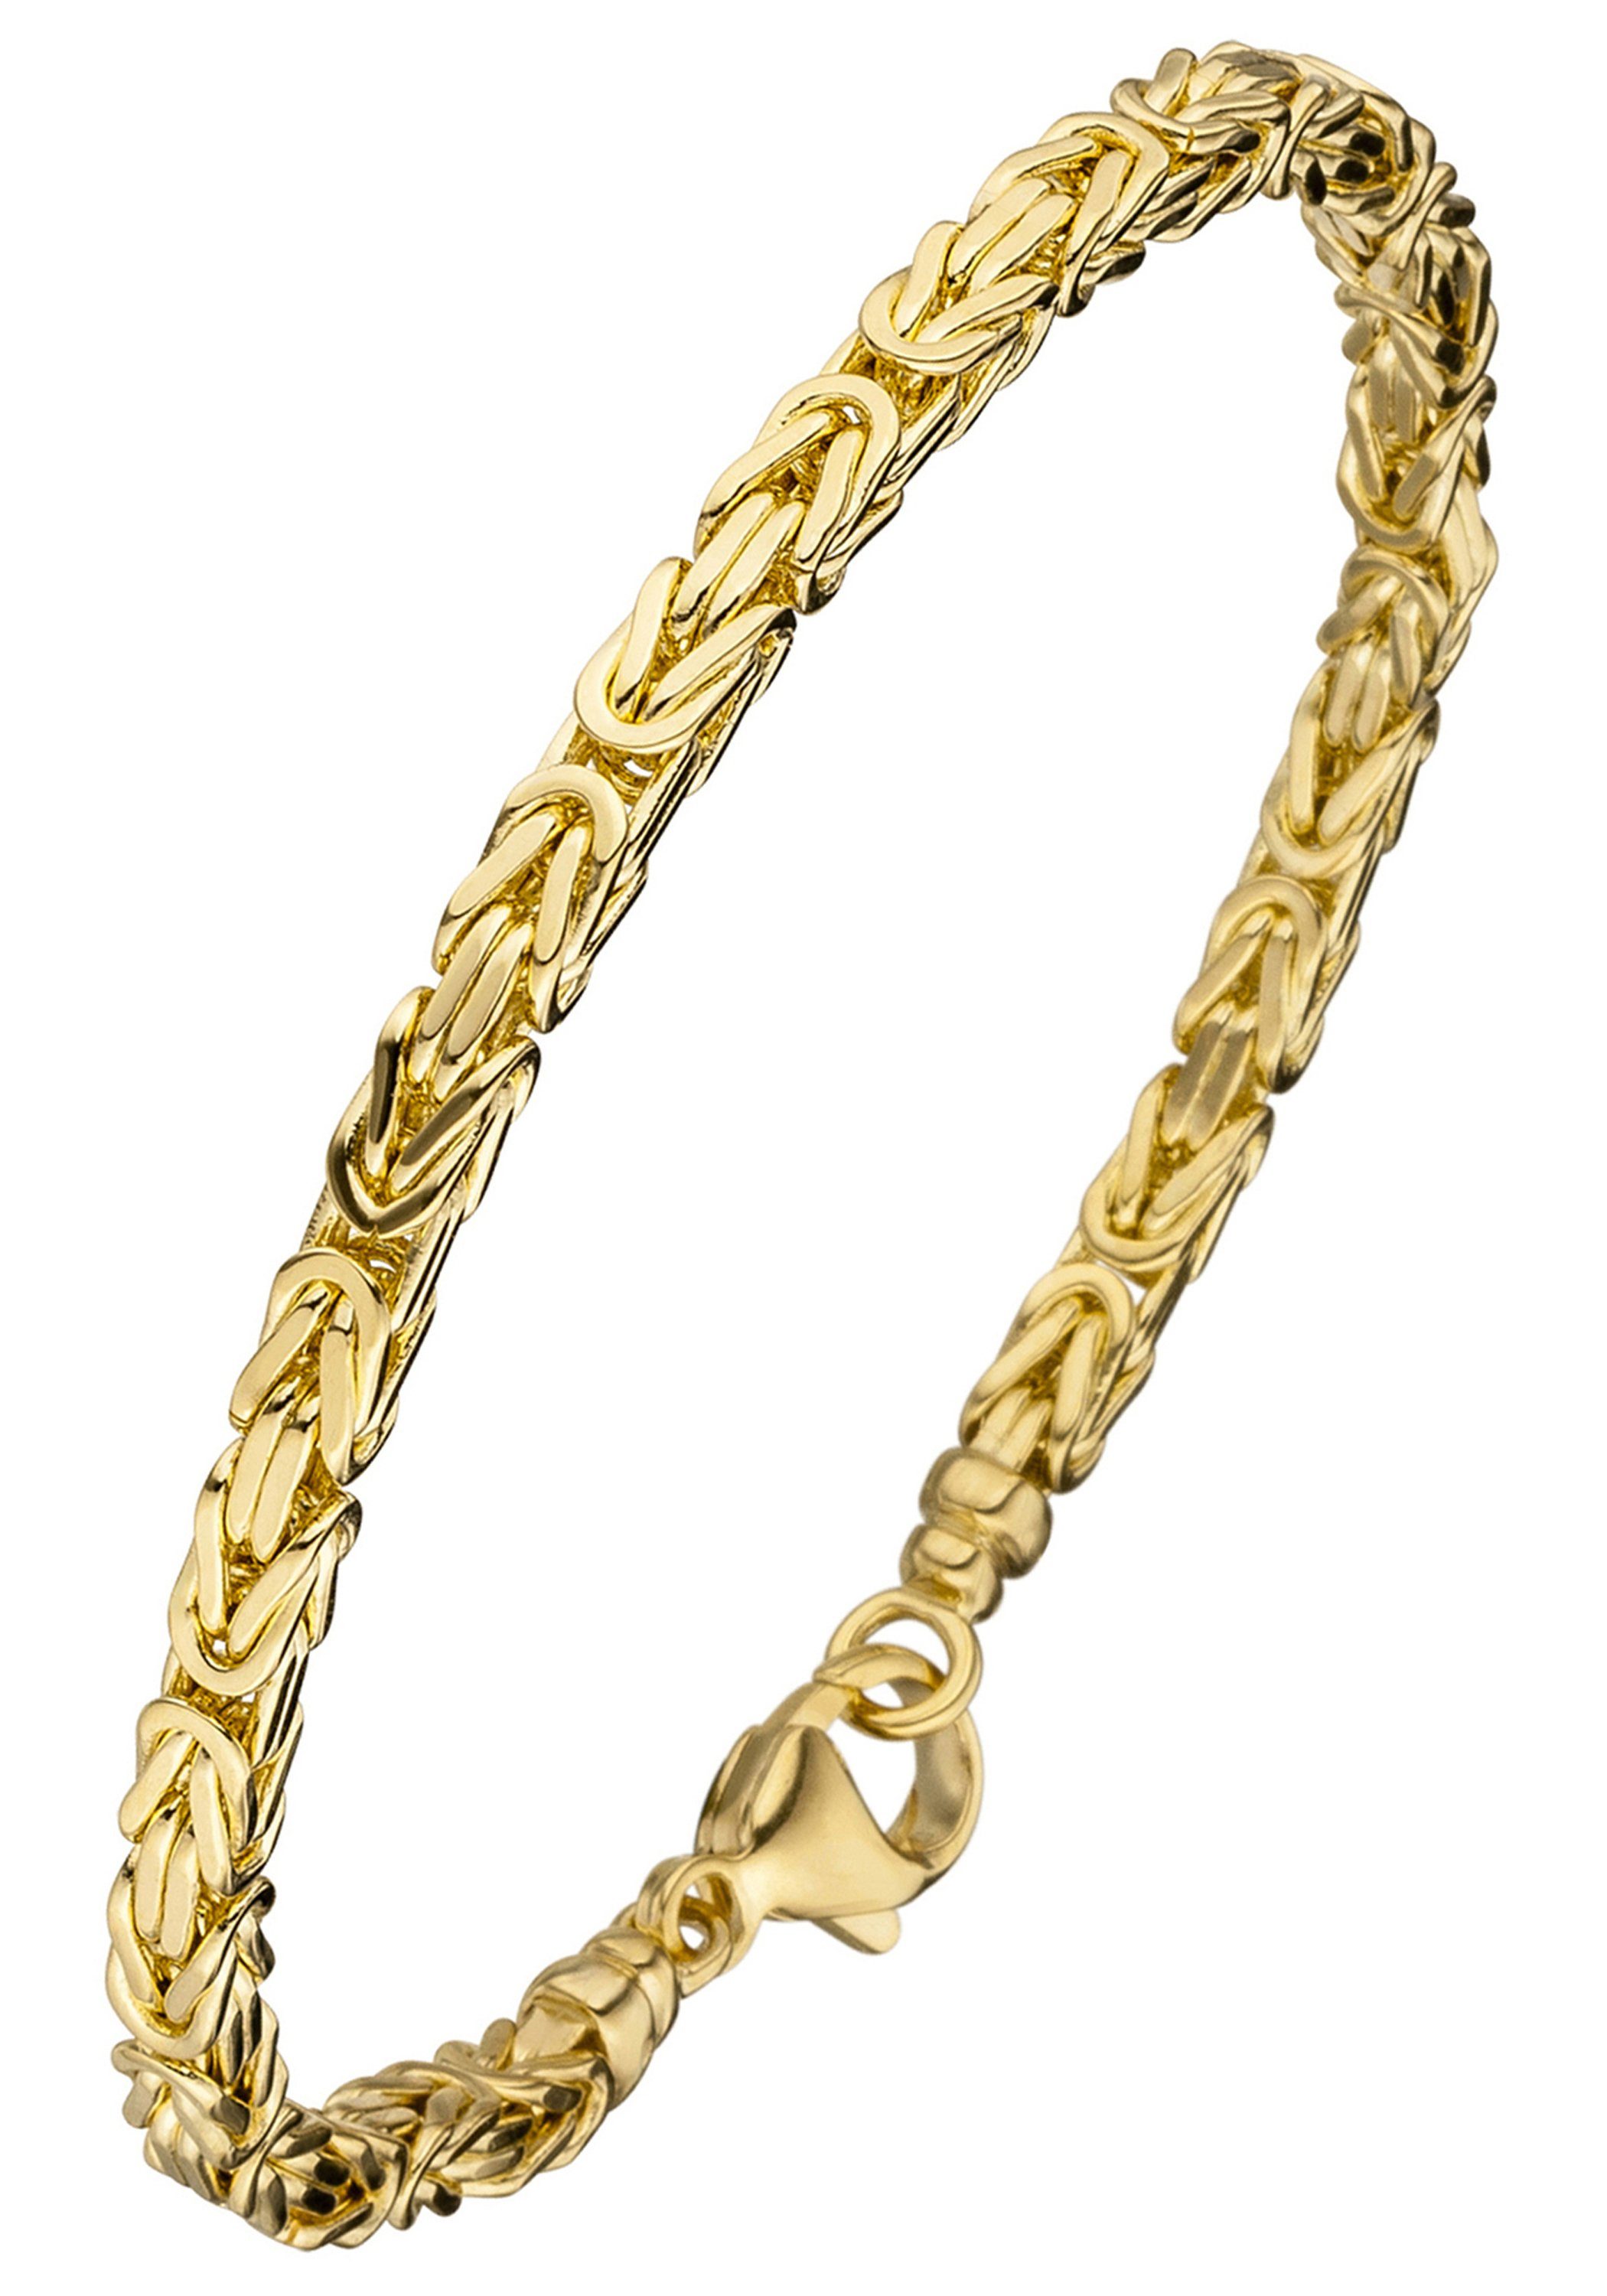 JOBO Armband, Königsarmband 333 Gold massiv 19 cm, Hochwertiges Armband in  Königskettengliederung | Edelstahlarmbänder